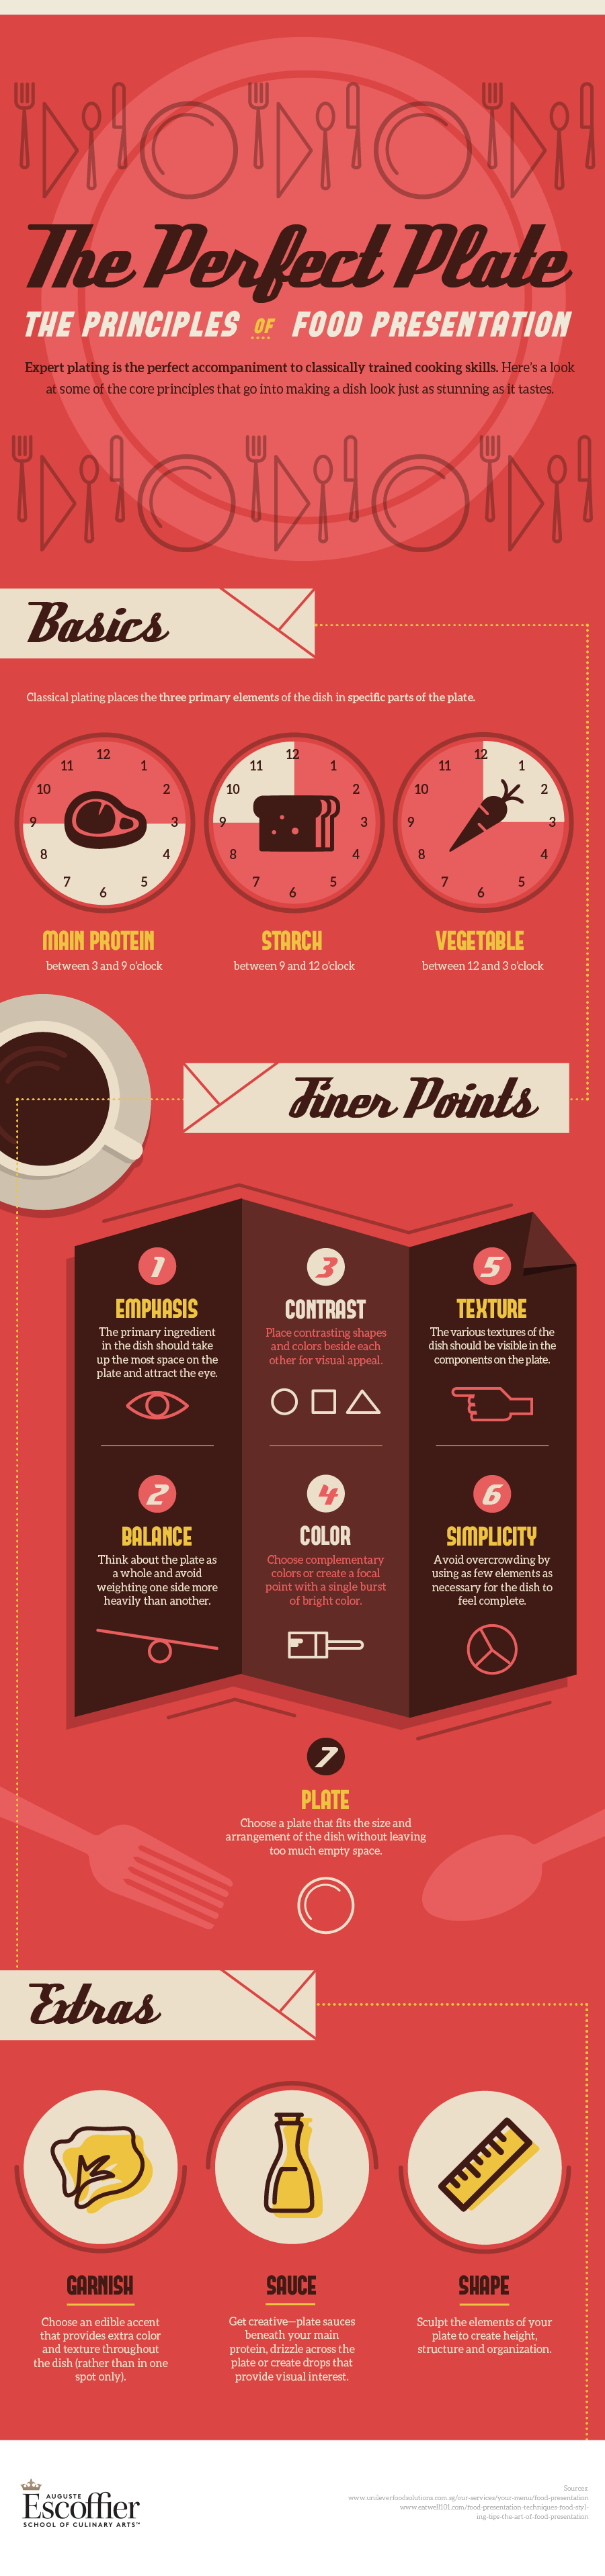 Perfect Plate Principles Food Presentation infographic